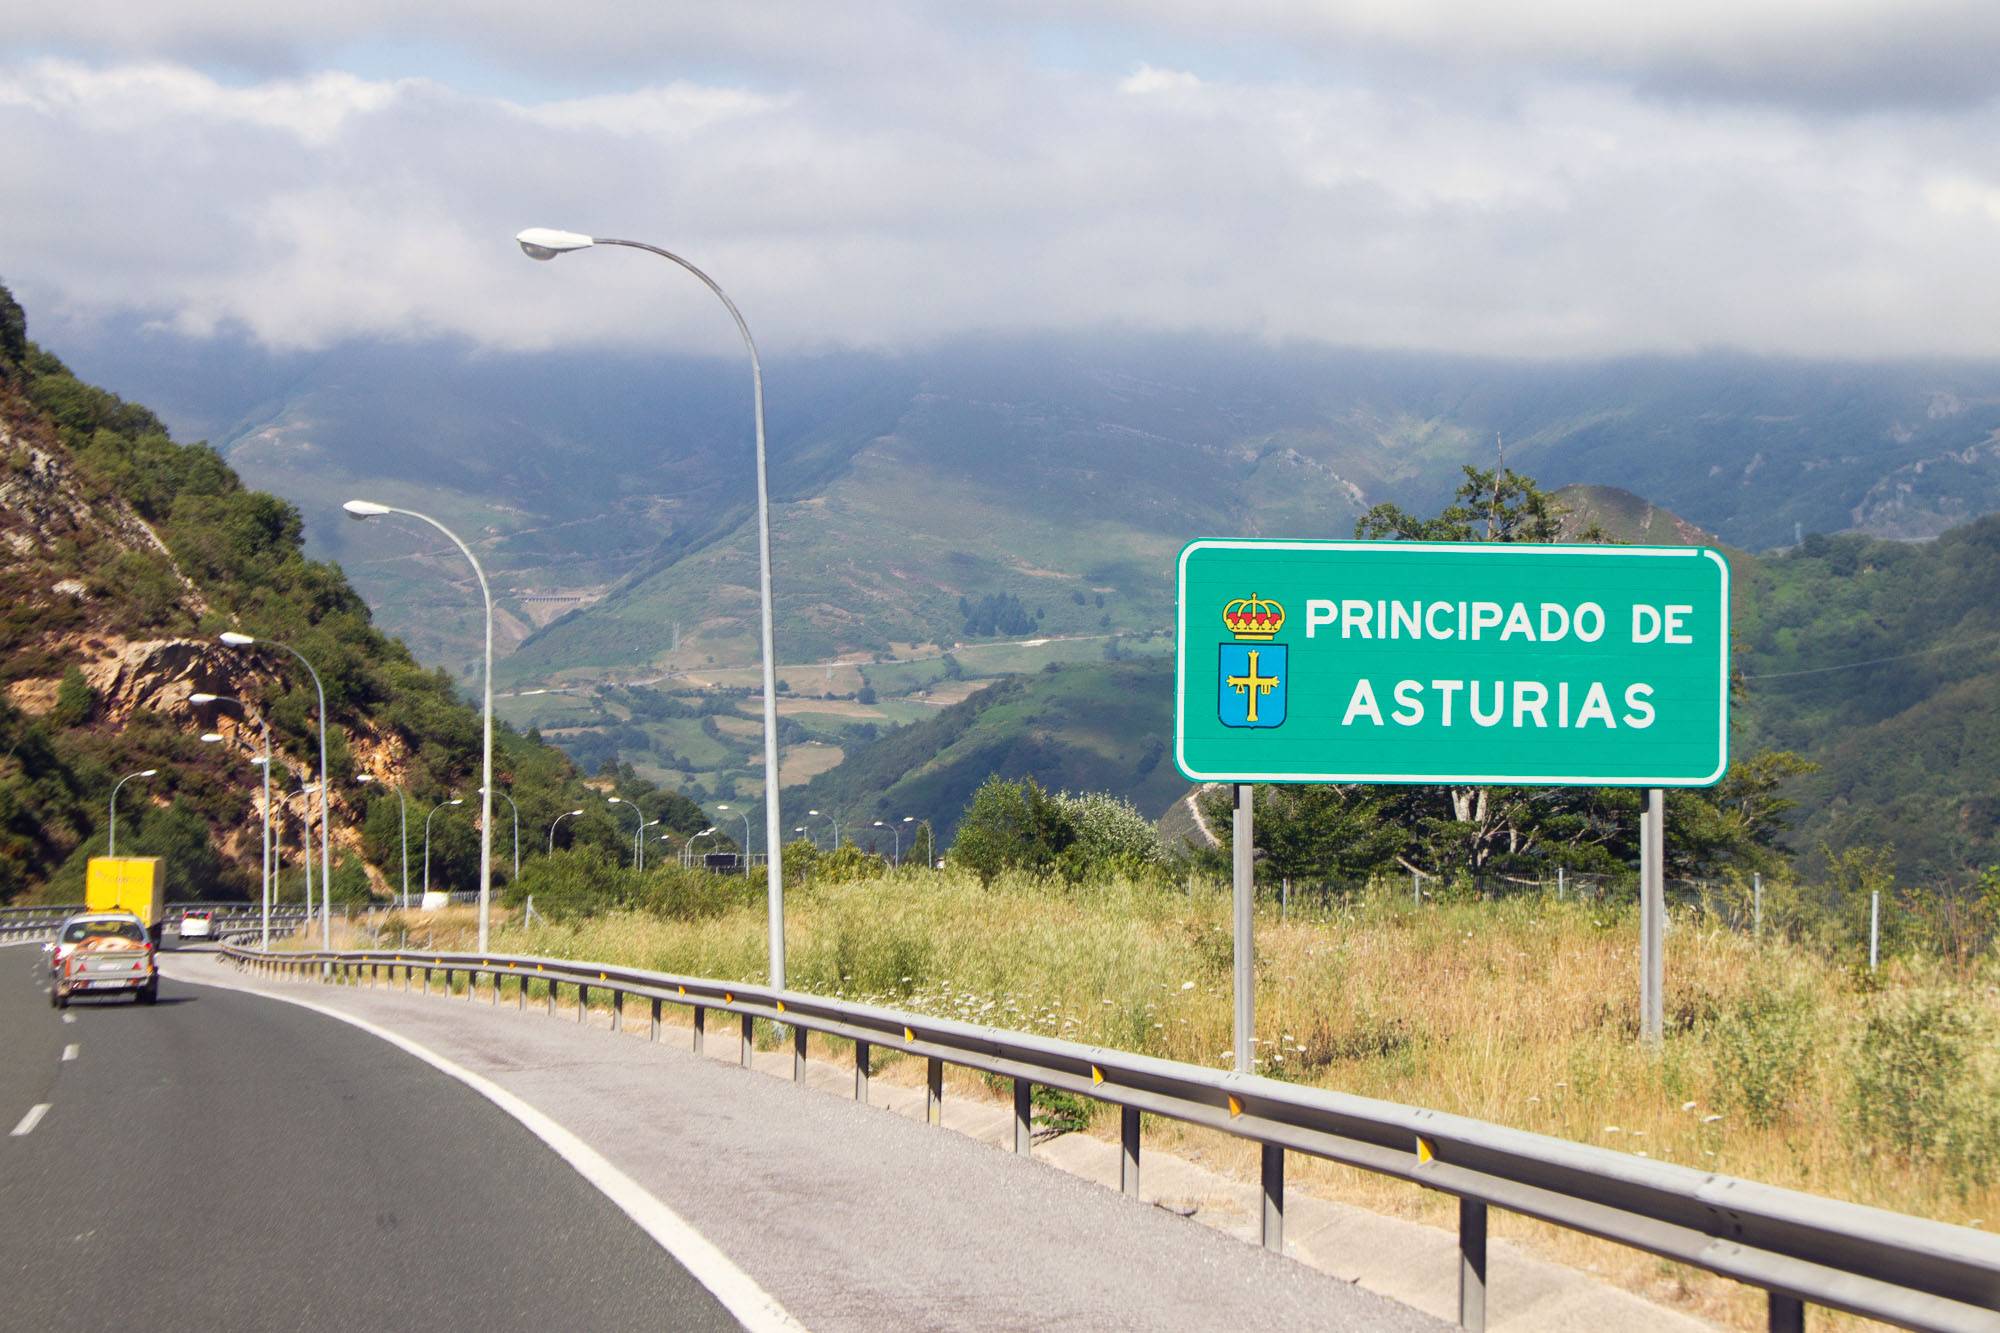 Entering the Principado de Asturias